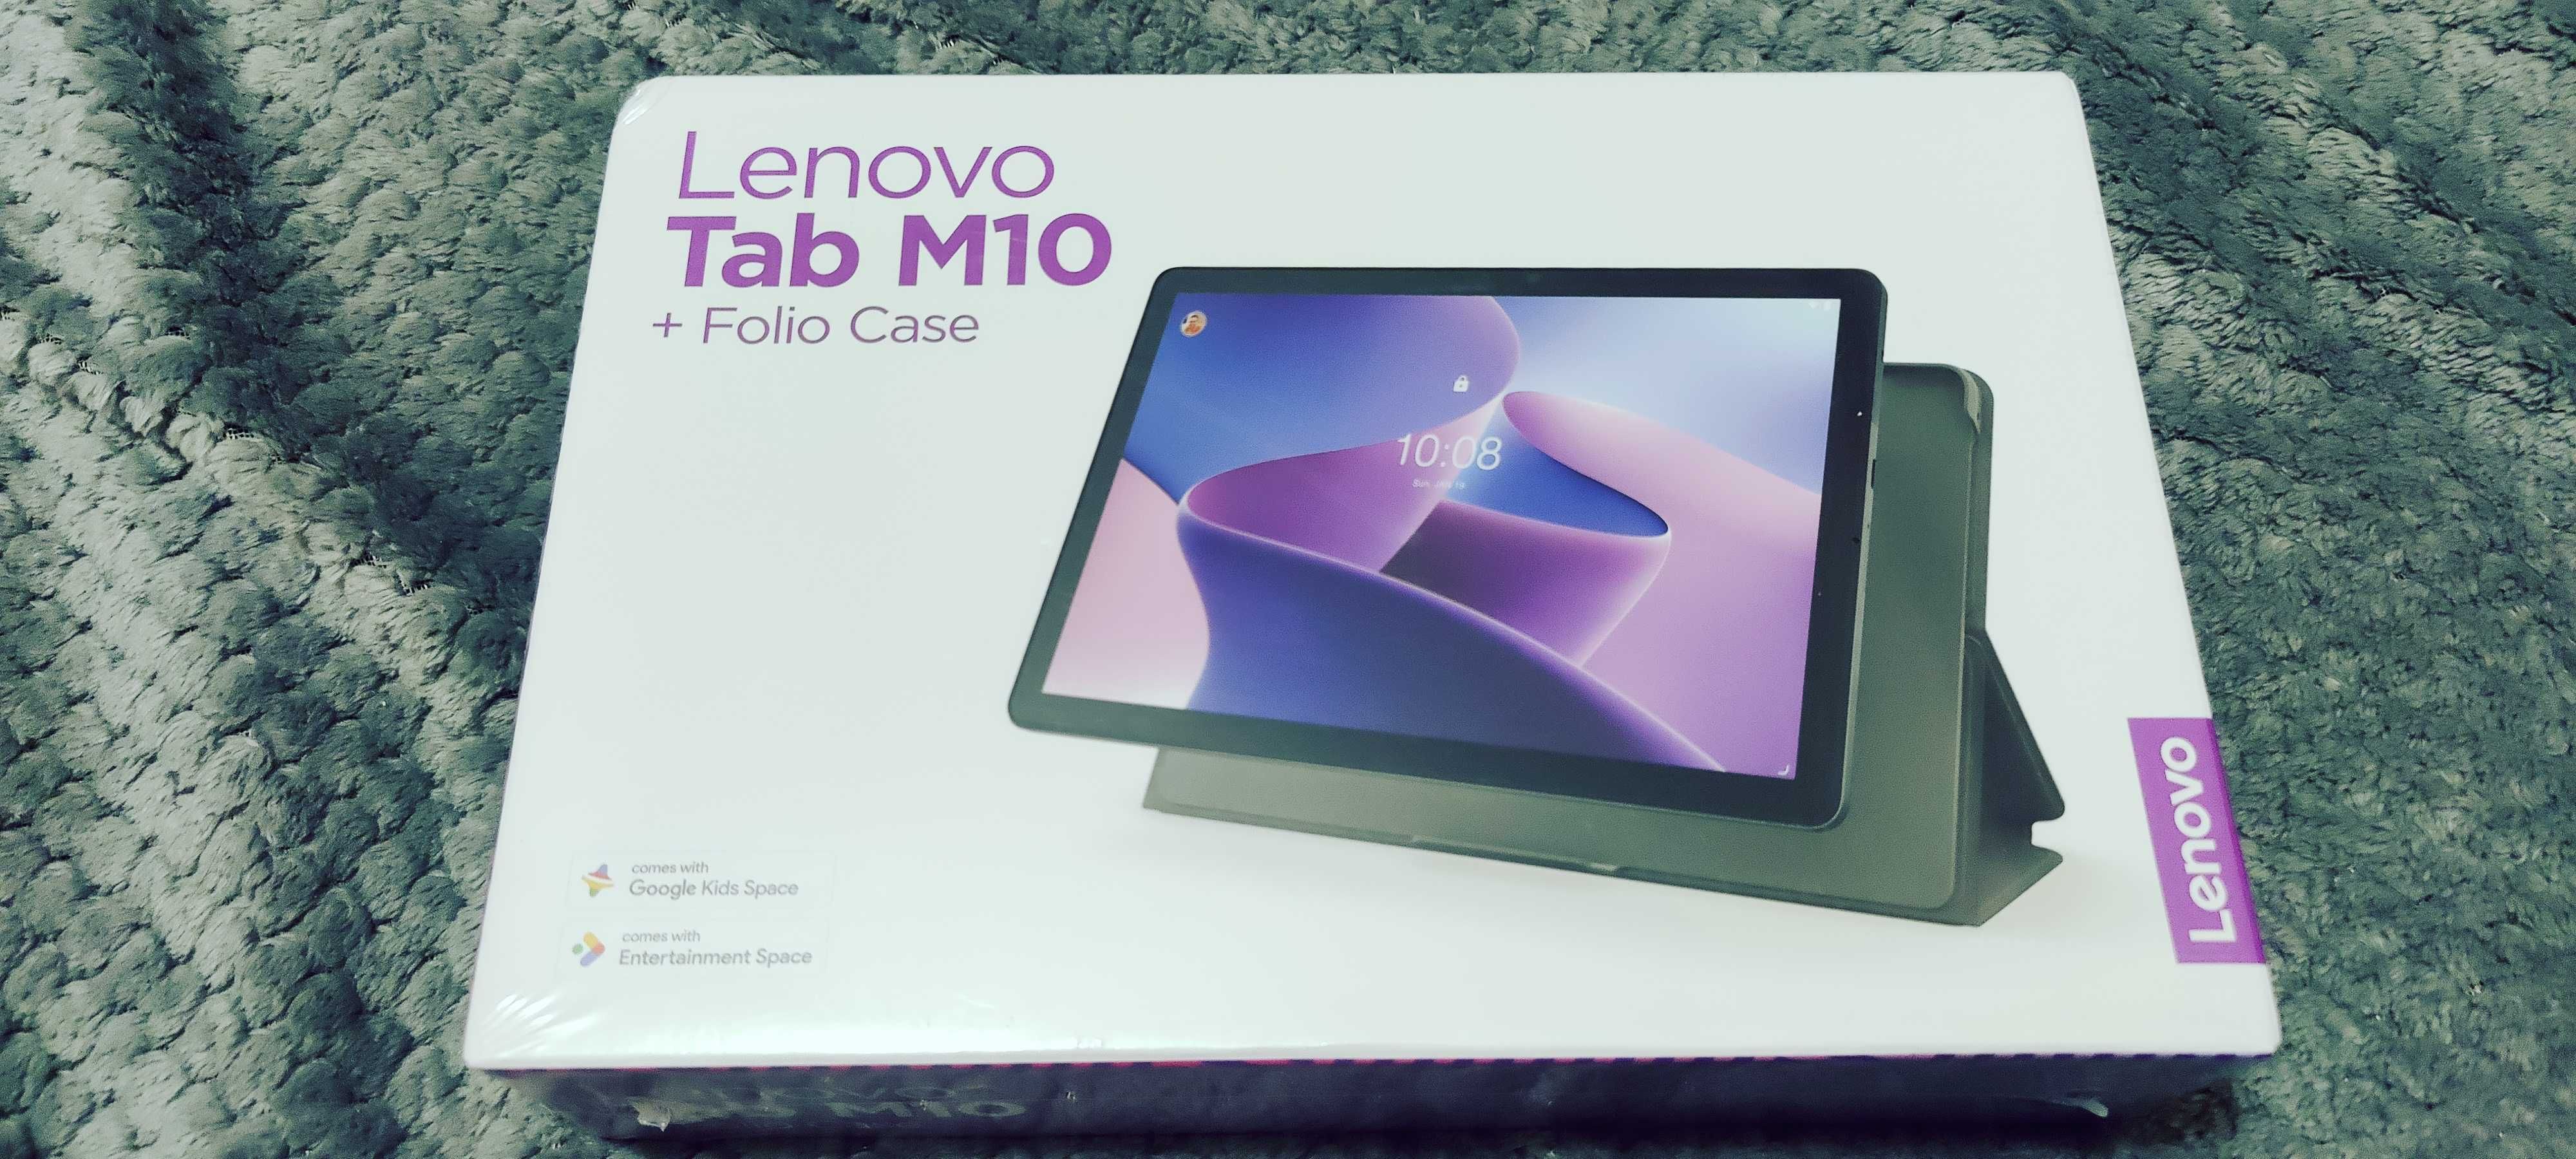 Tablet Lenovo M10 + Folio Case